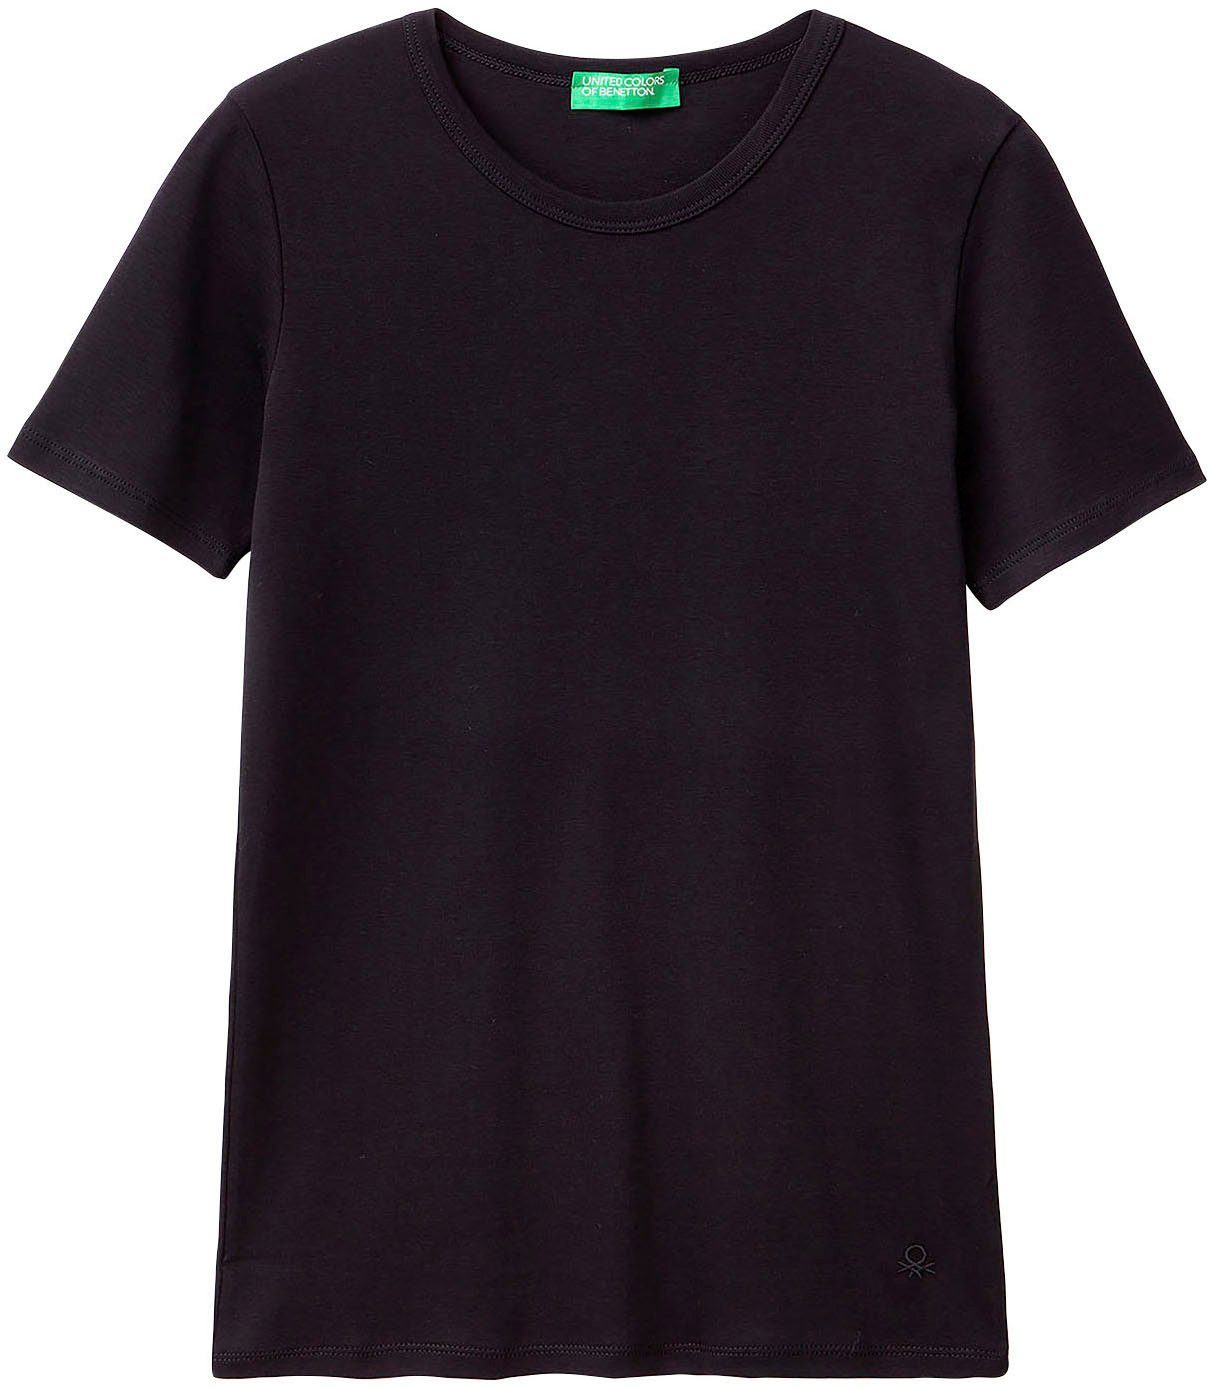 United schwarz T-Shirt Colors Benetton of